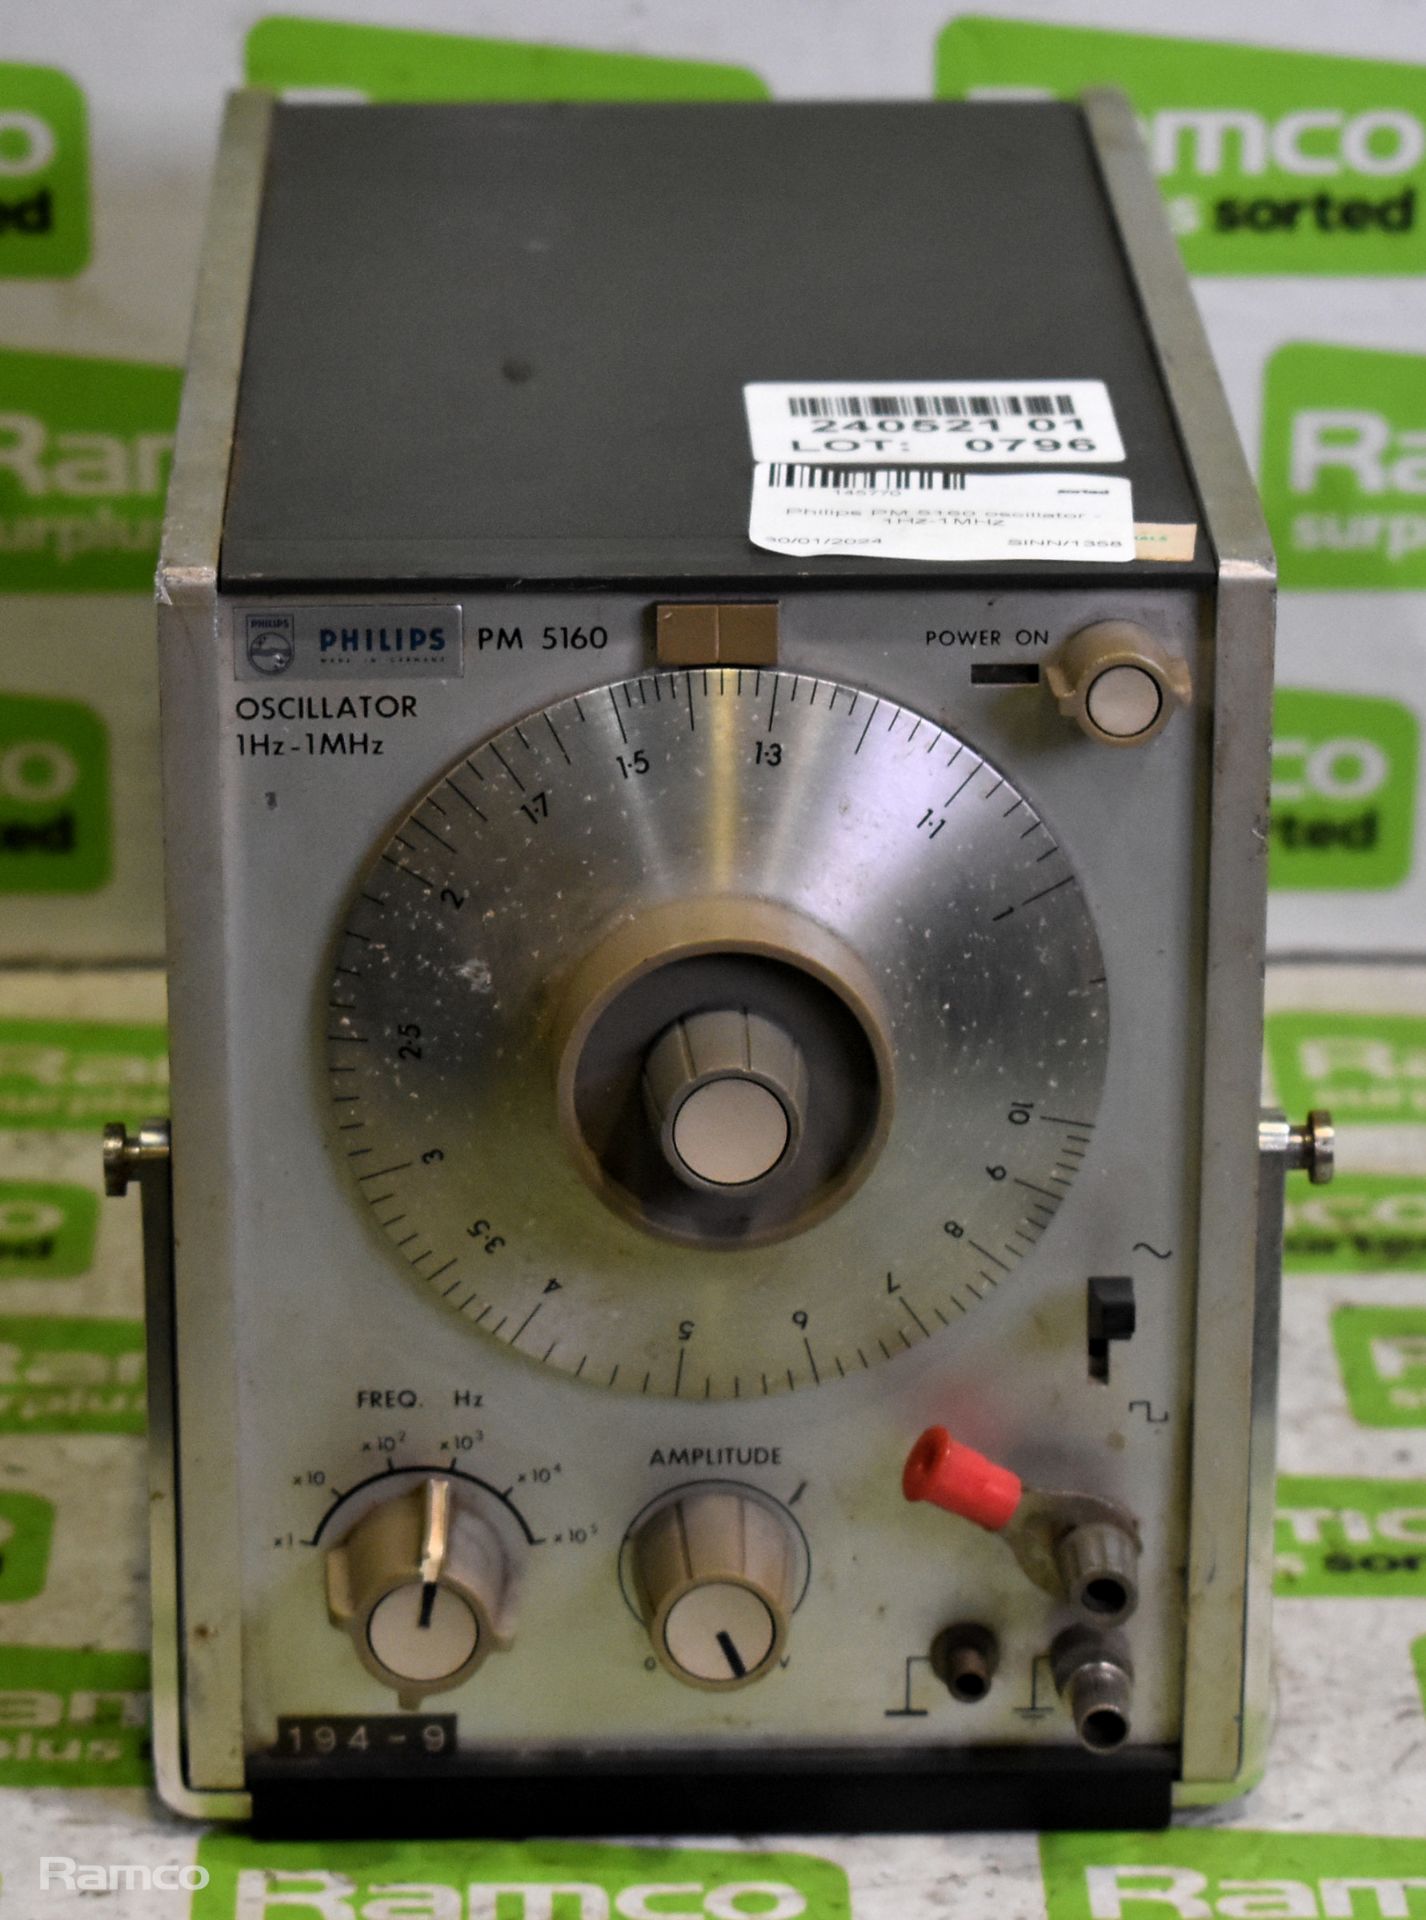 Philips PM 5160 oscillator - 1Hz-1MHz